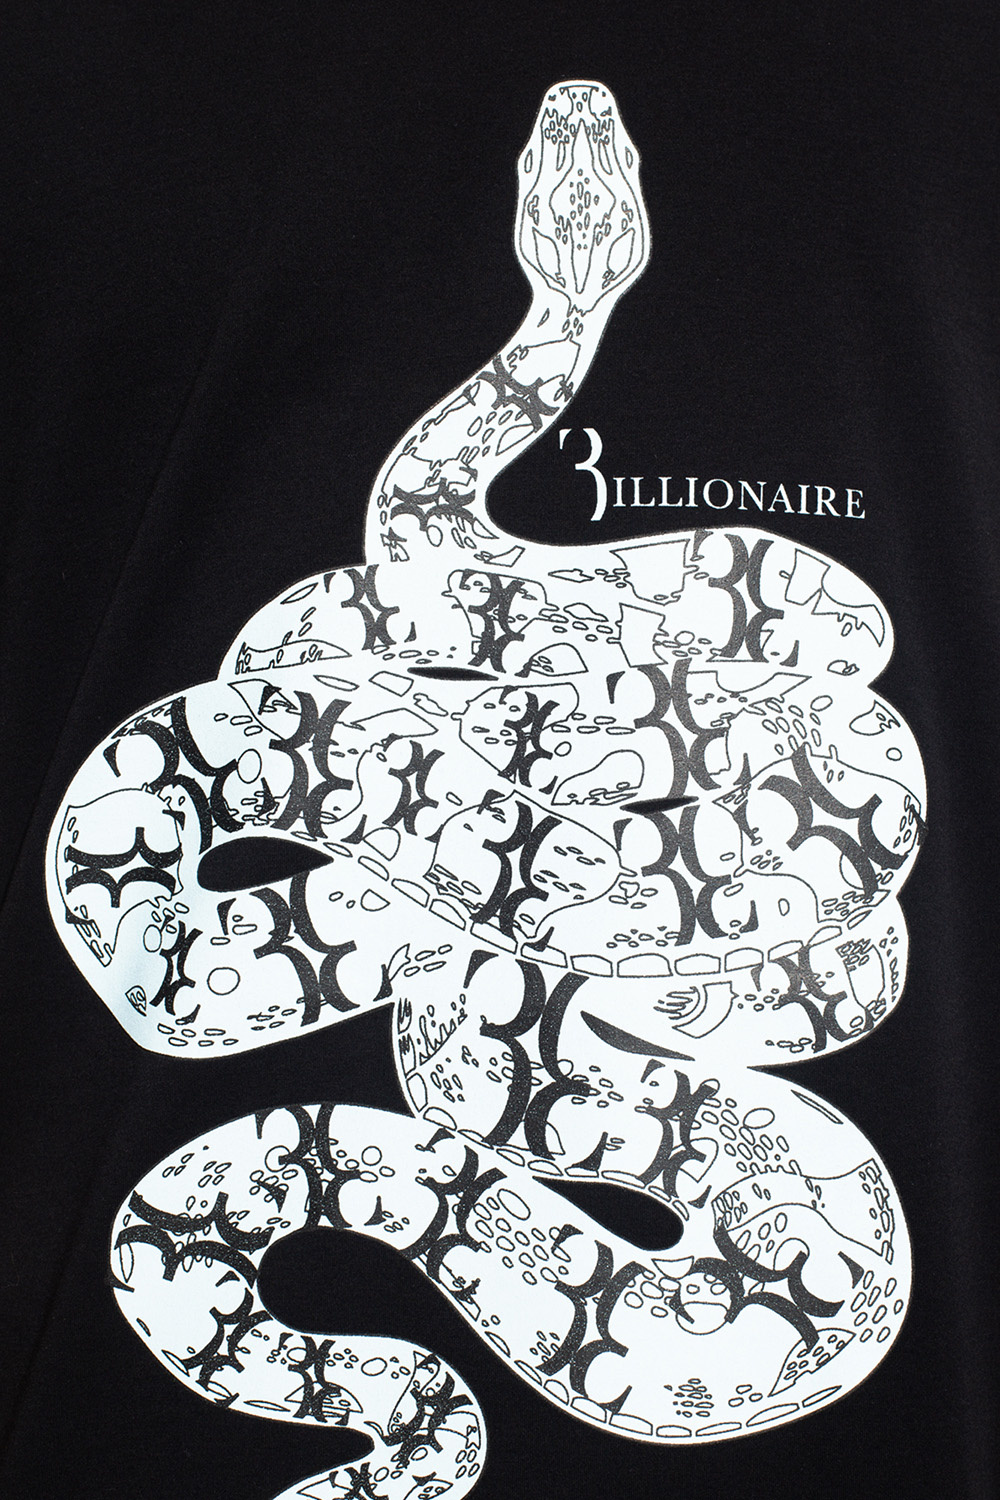 Billionaire Printed T-shirt